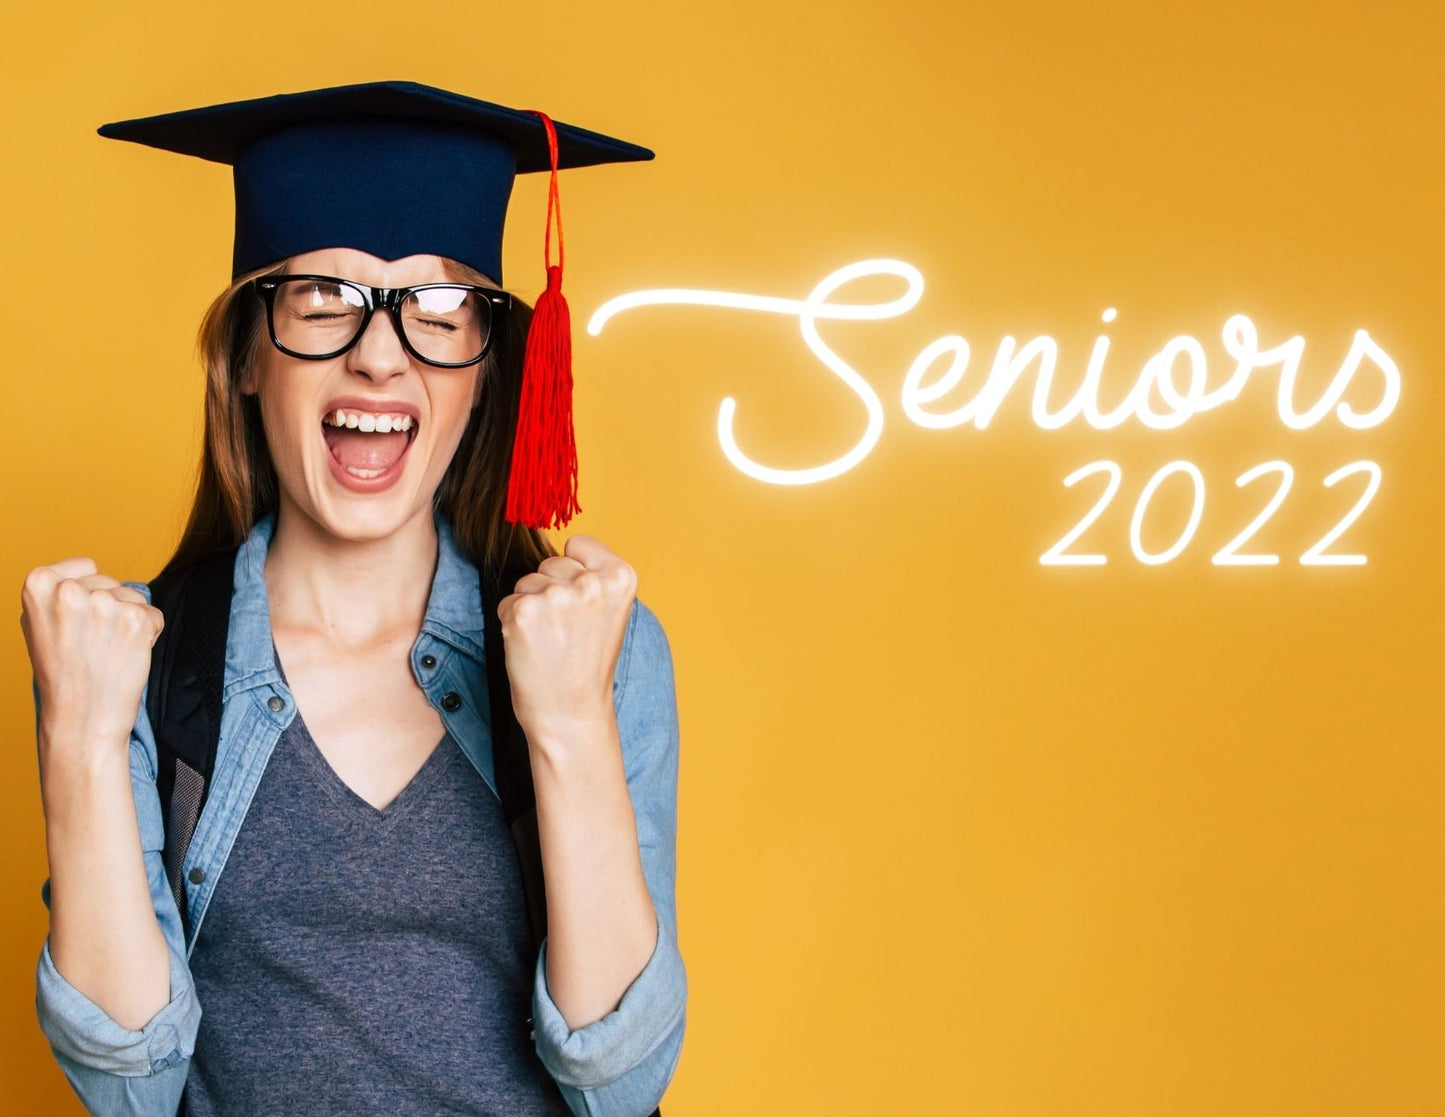 Seniors 2022 Graduation Neon Sign